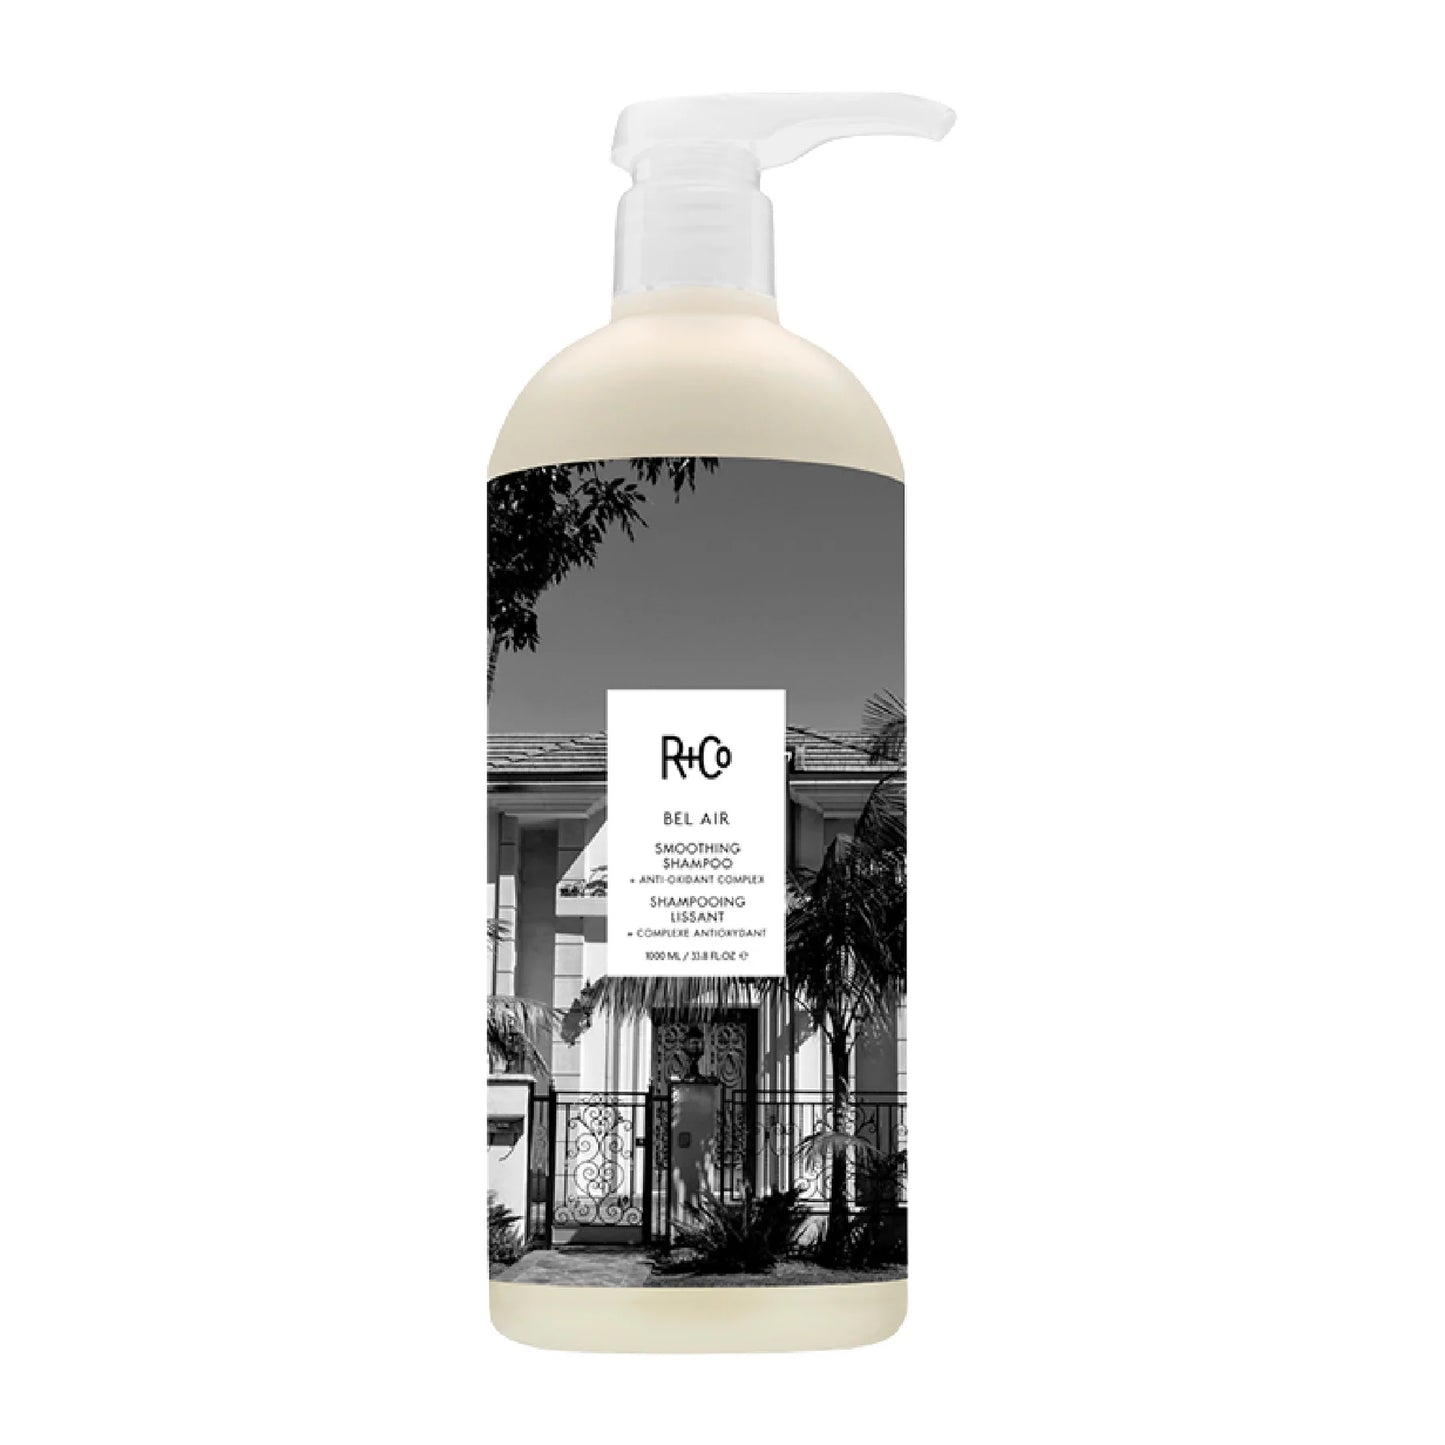 R + Co Bel Air Smoothing Shampoo